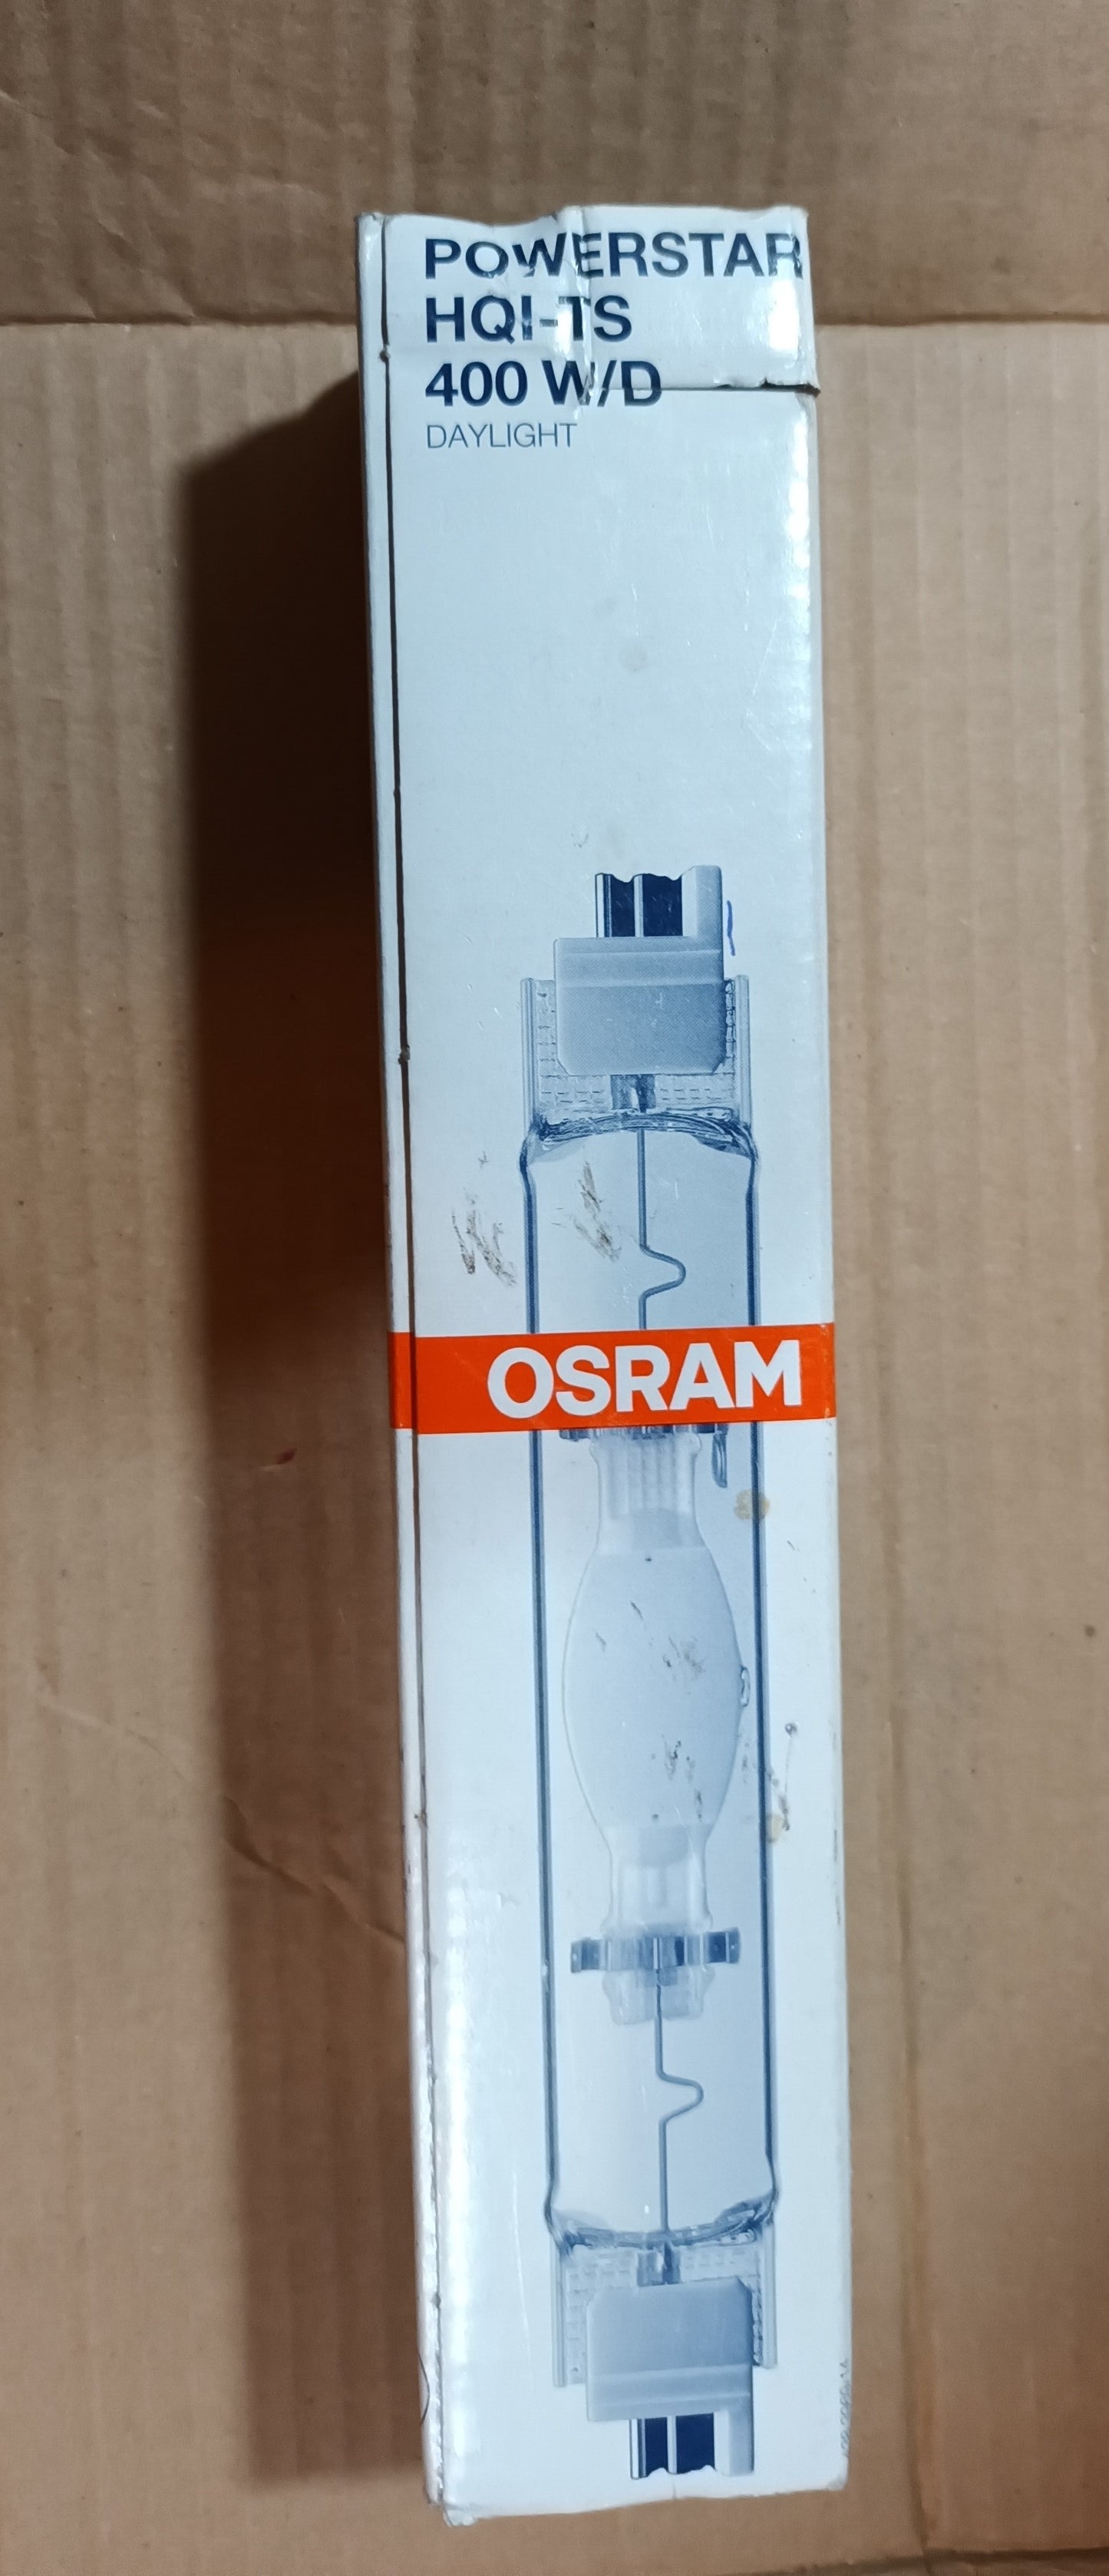 Osram Powerstar HQI-TS 400w W/D Daylight